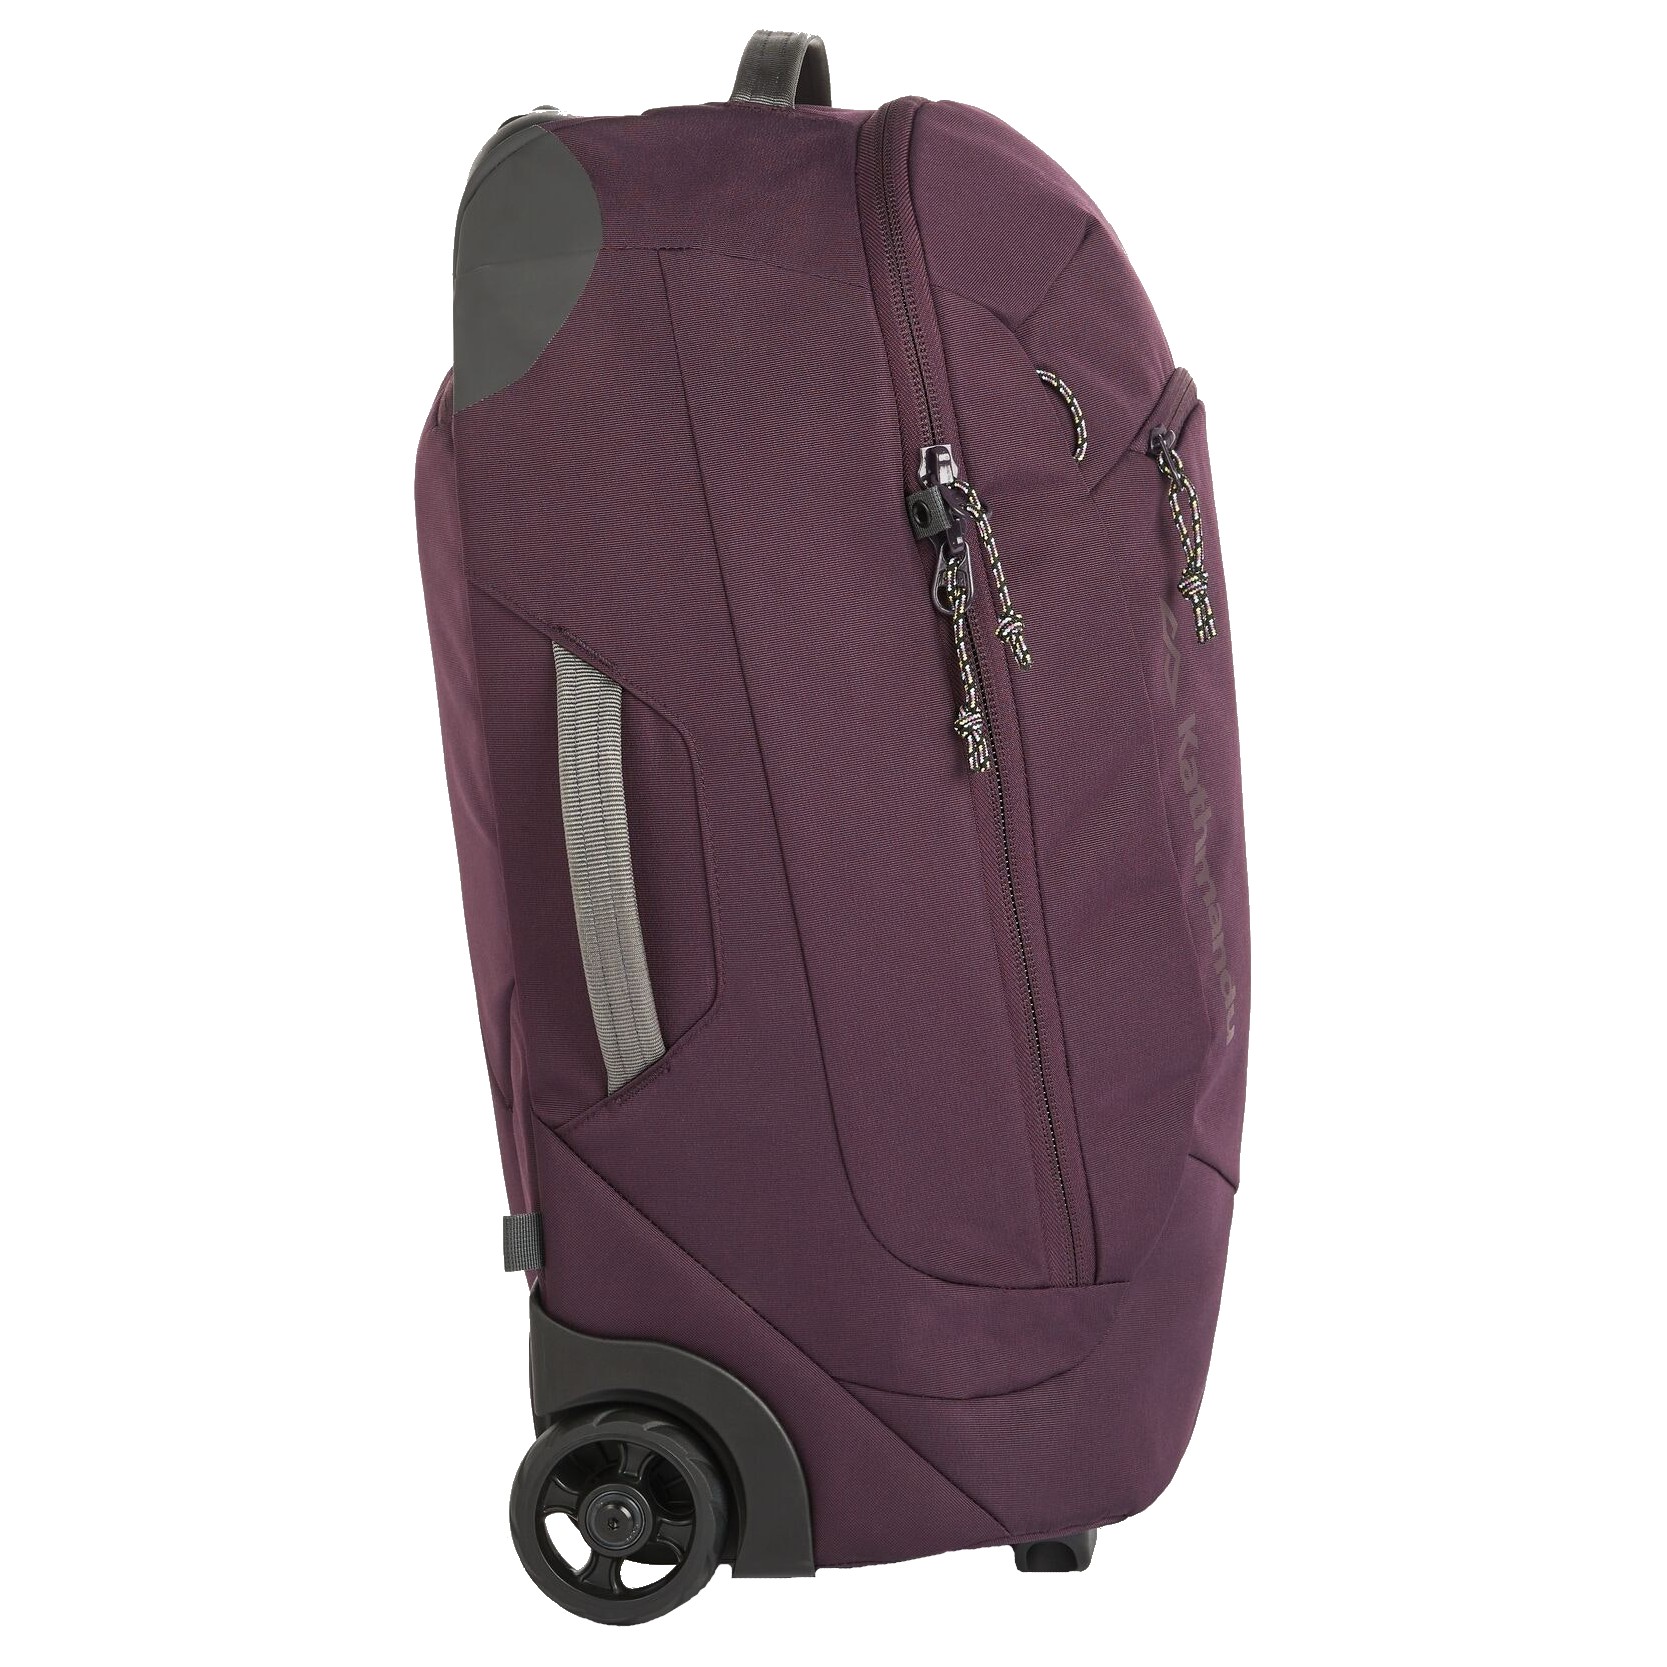 Kathmandu Hybrid Trolley v3 32 Wheeled Bag/Suitcase